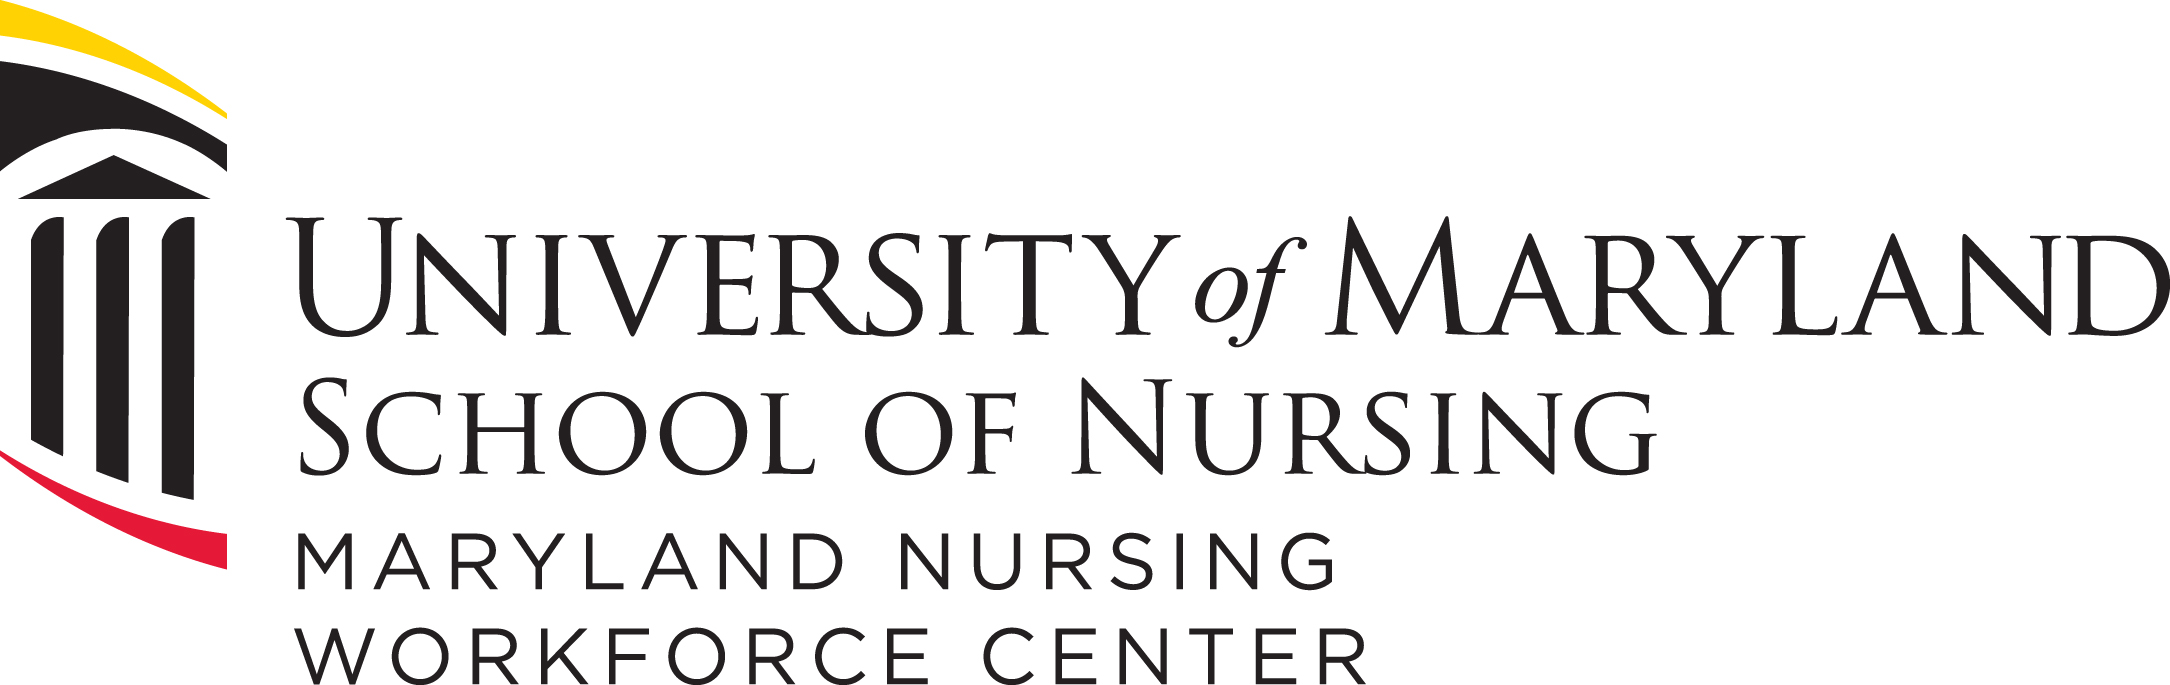 UMSON Maryland Nursing Workforce Center logo